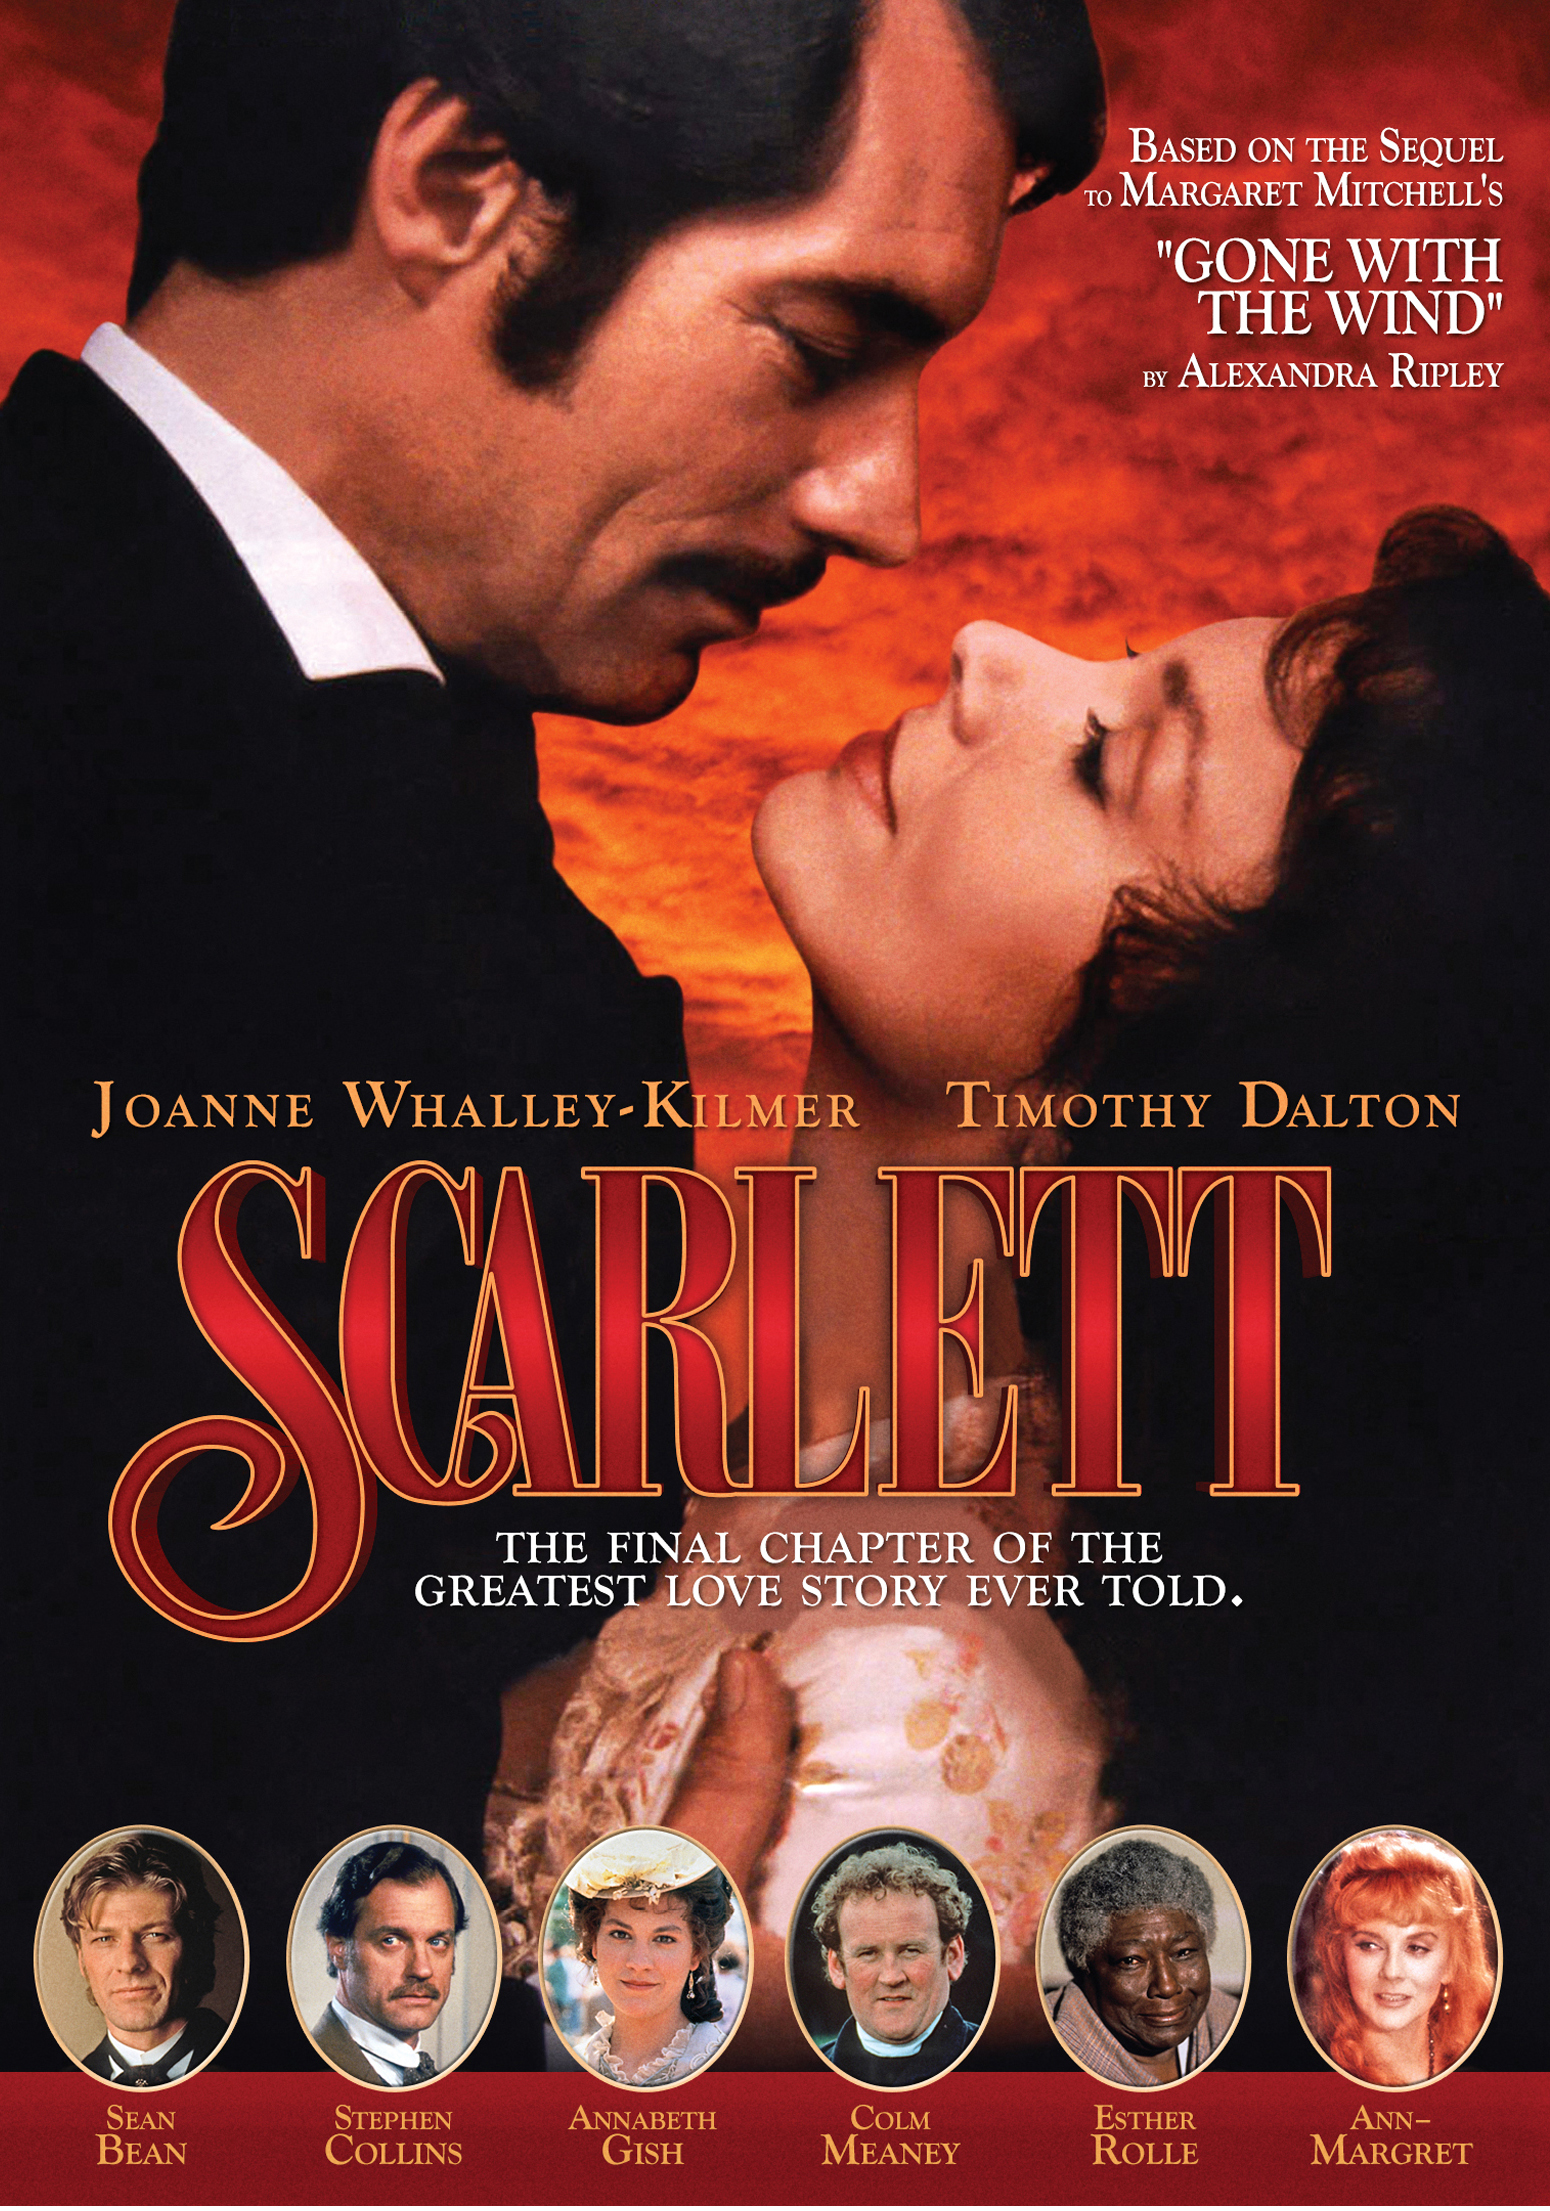 Scarlett (miniseries) - Wikipedia